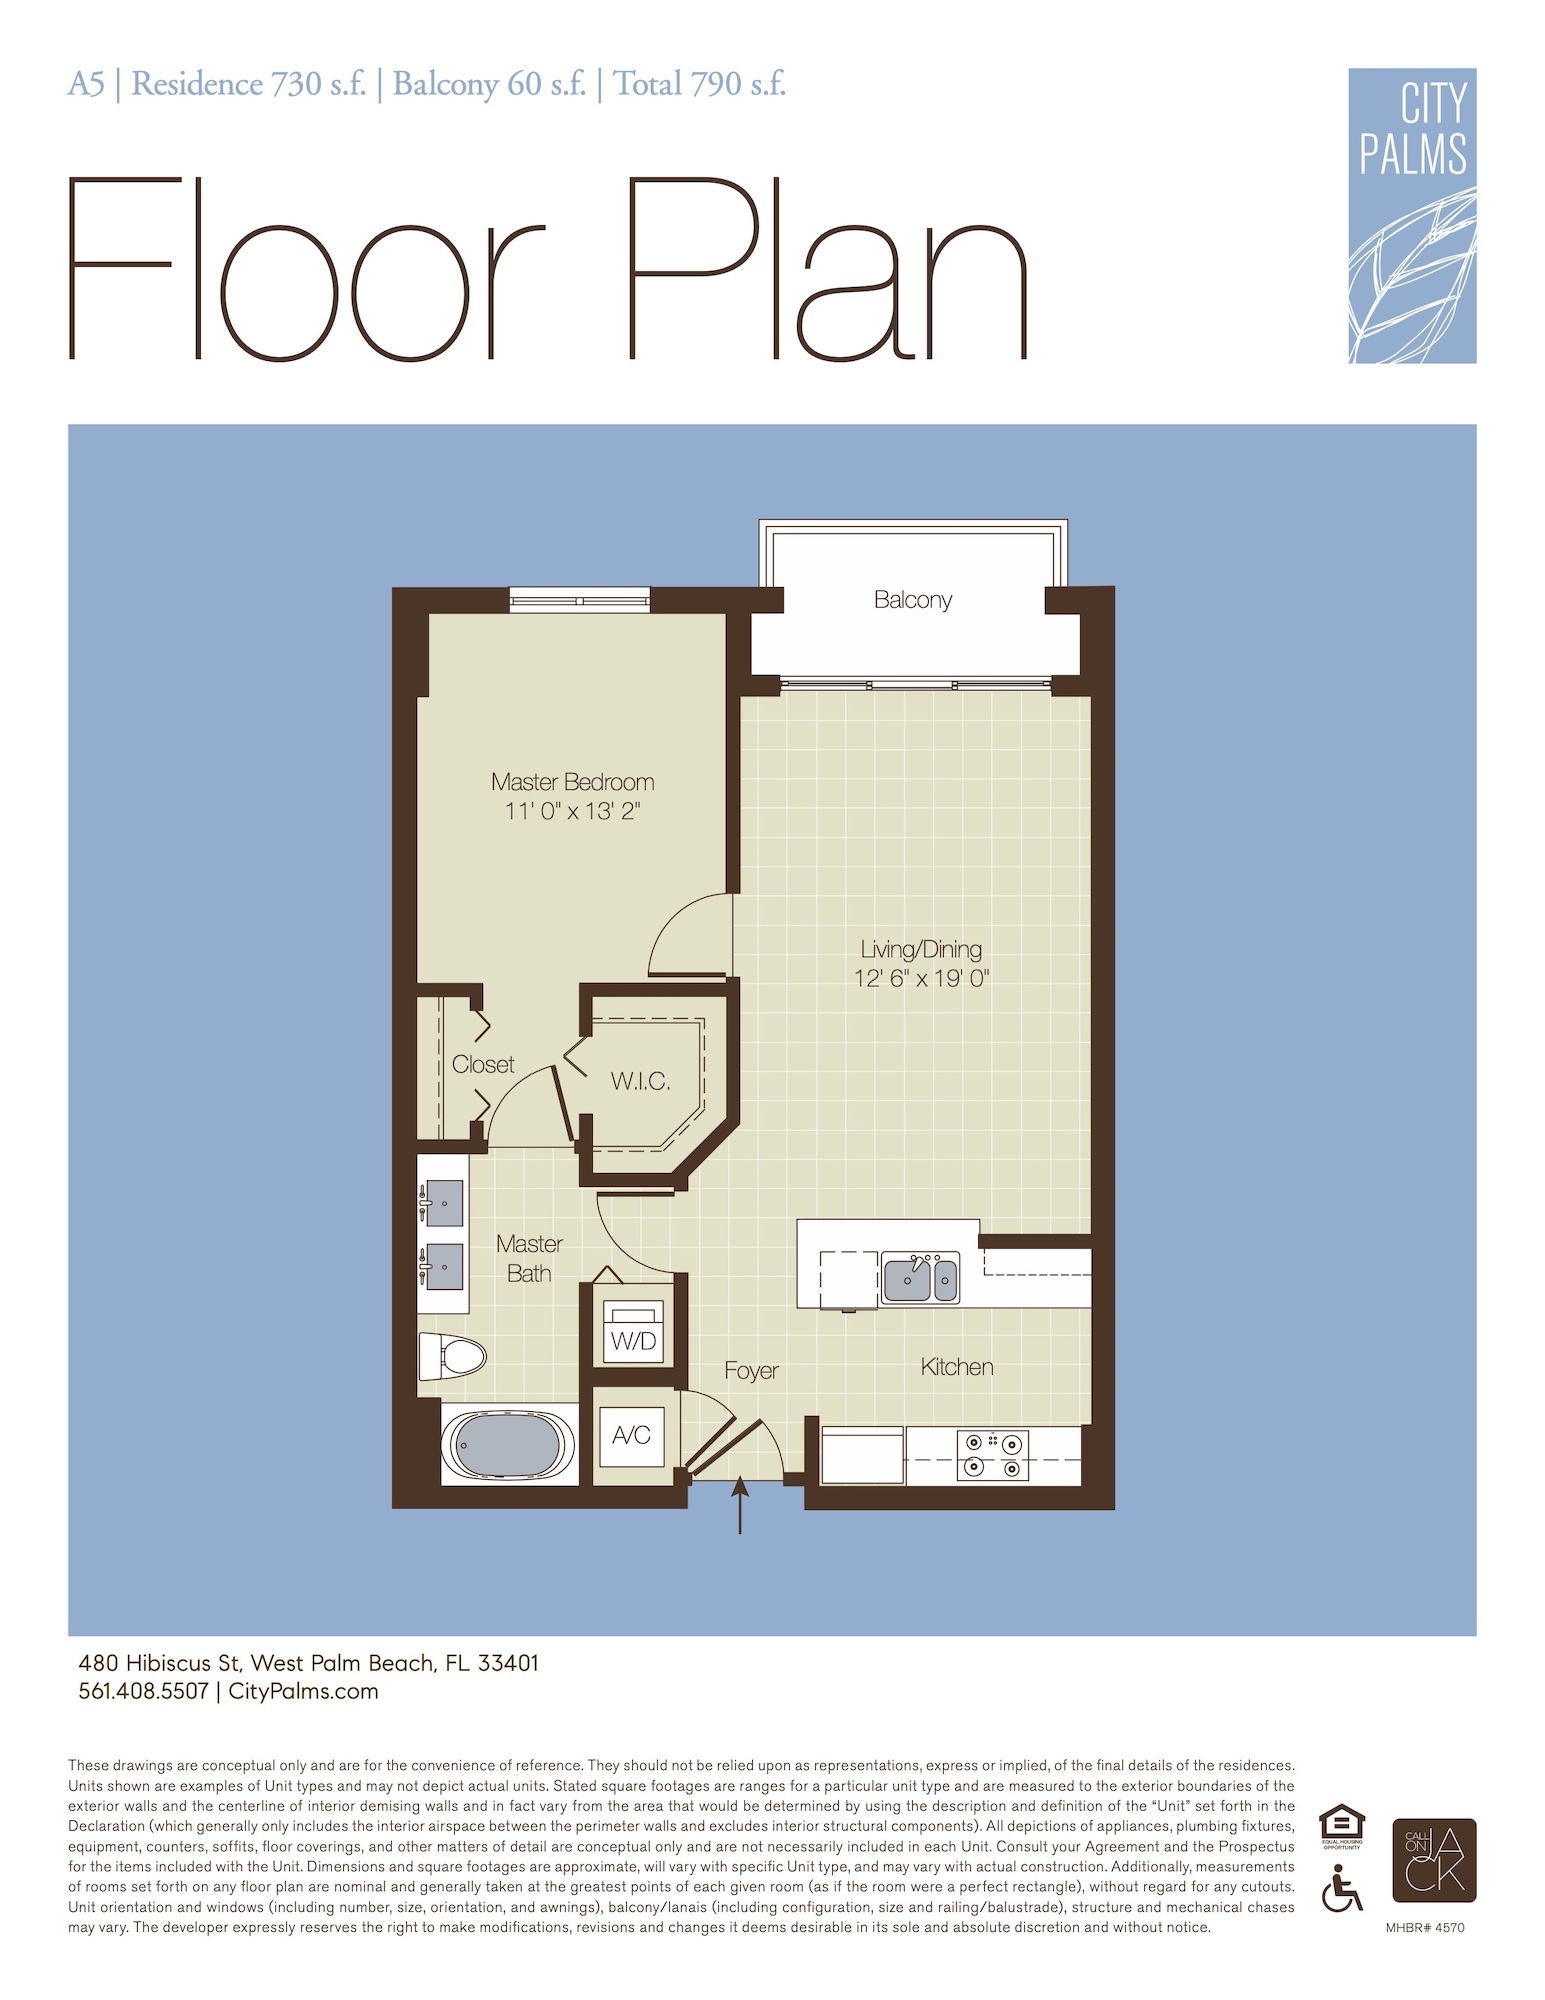 Floor Plan for City Palms Floorplans, A5